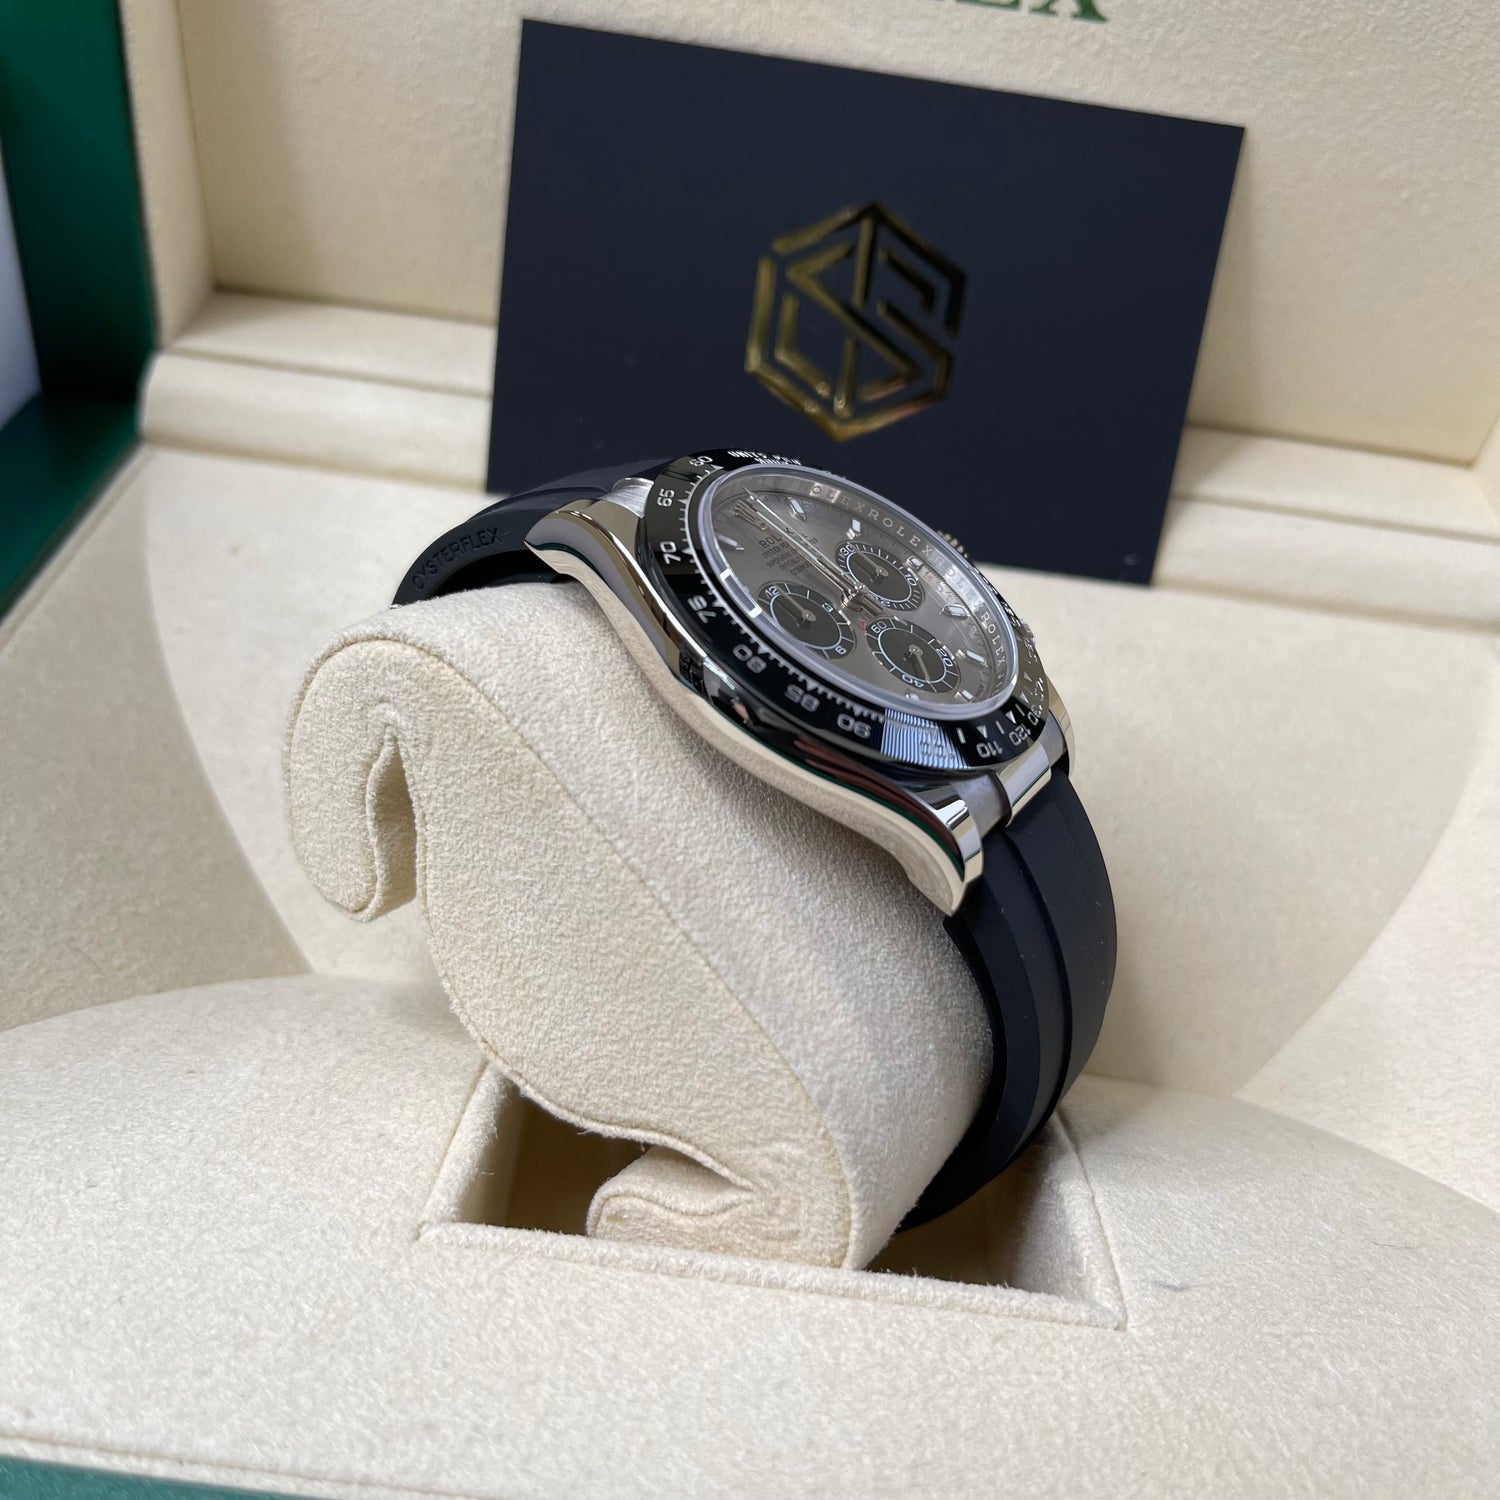 Rolex Cosmograph Daytona 18ct White Gold 116519LN Full Set November 2020 Watch